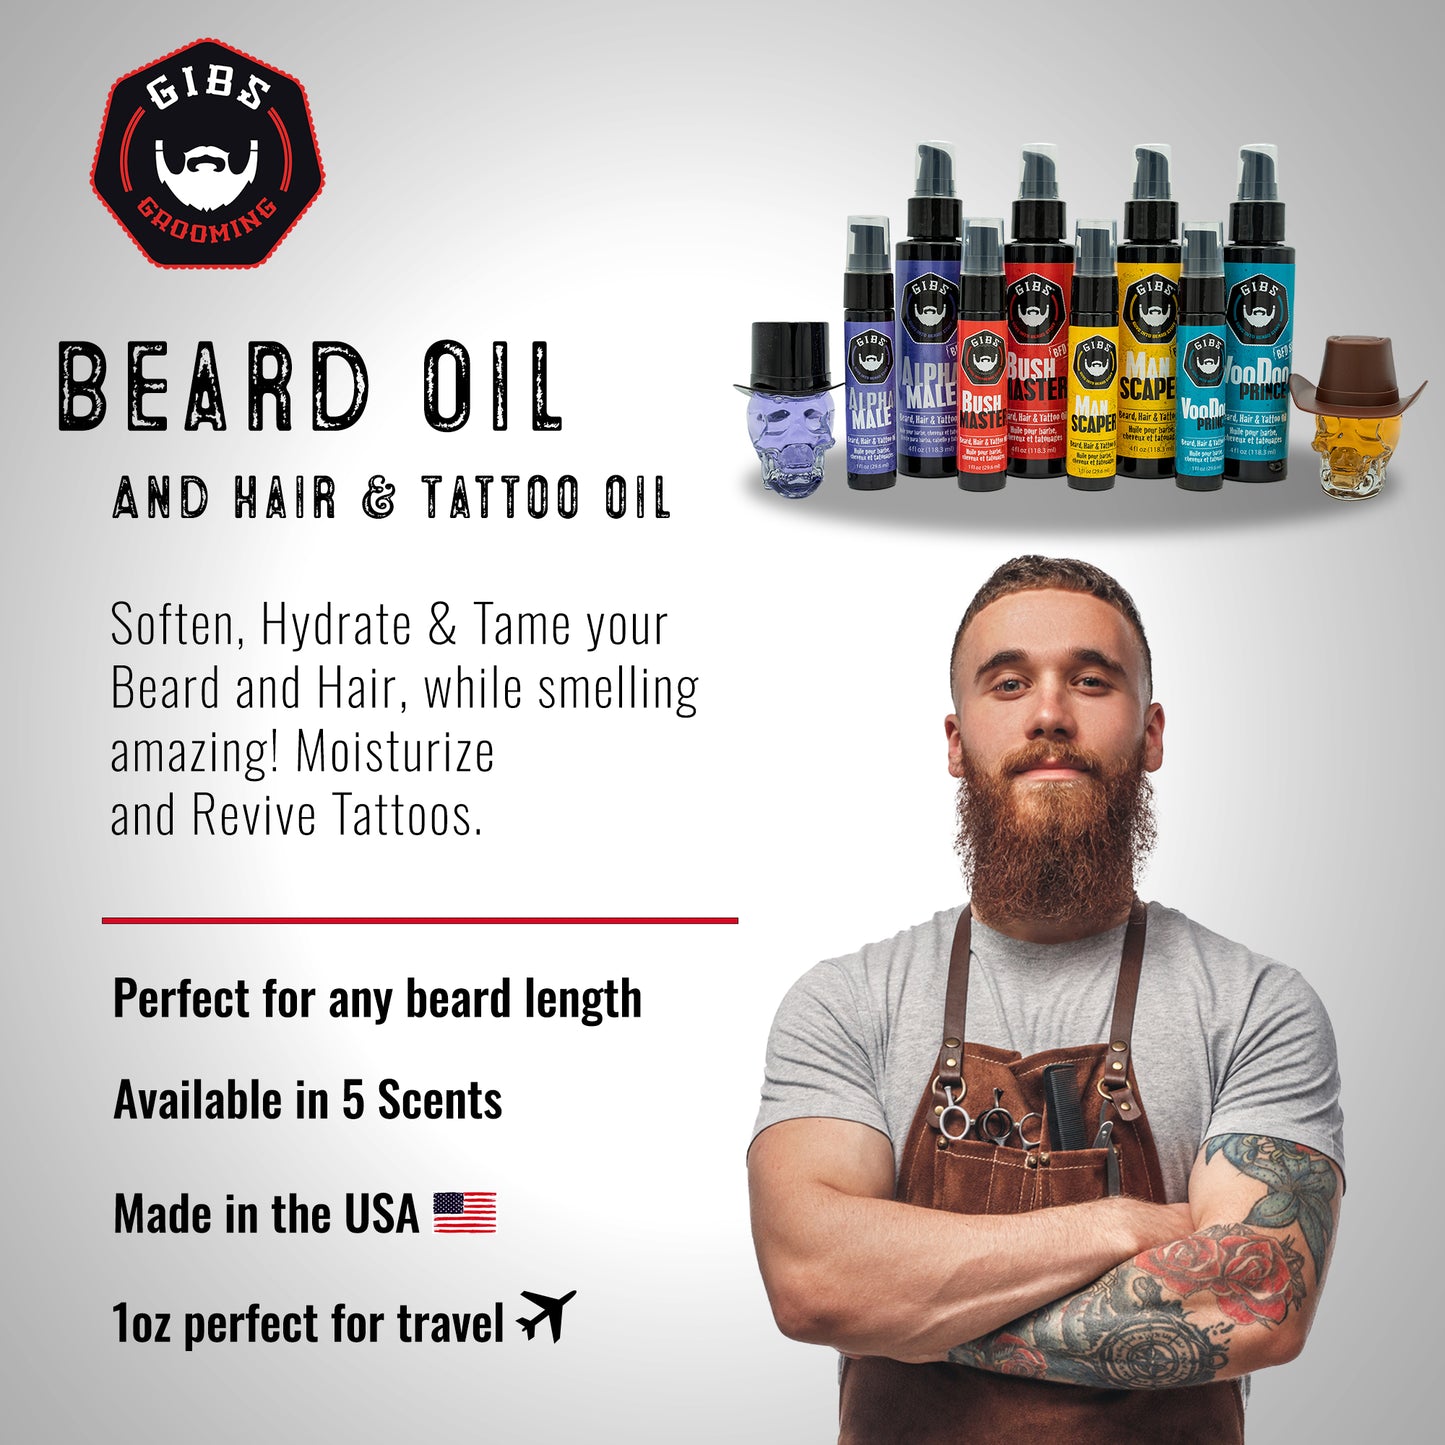 Voodoo Prince Beard, Hair & Tattoo Oil- 4oz.